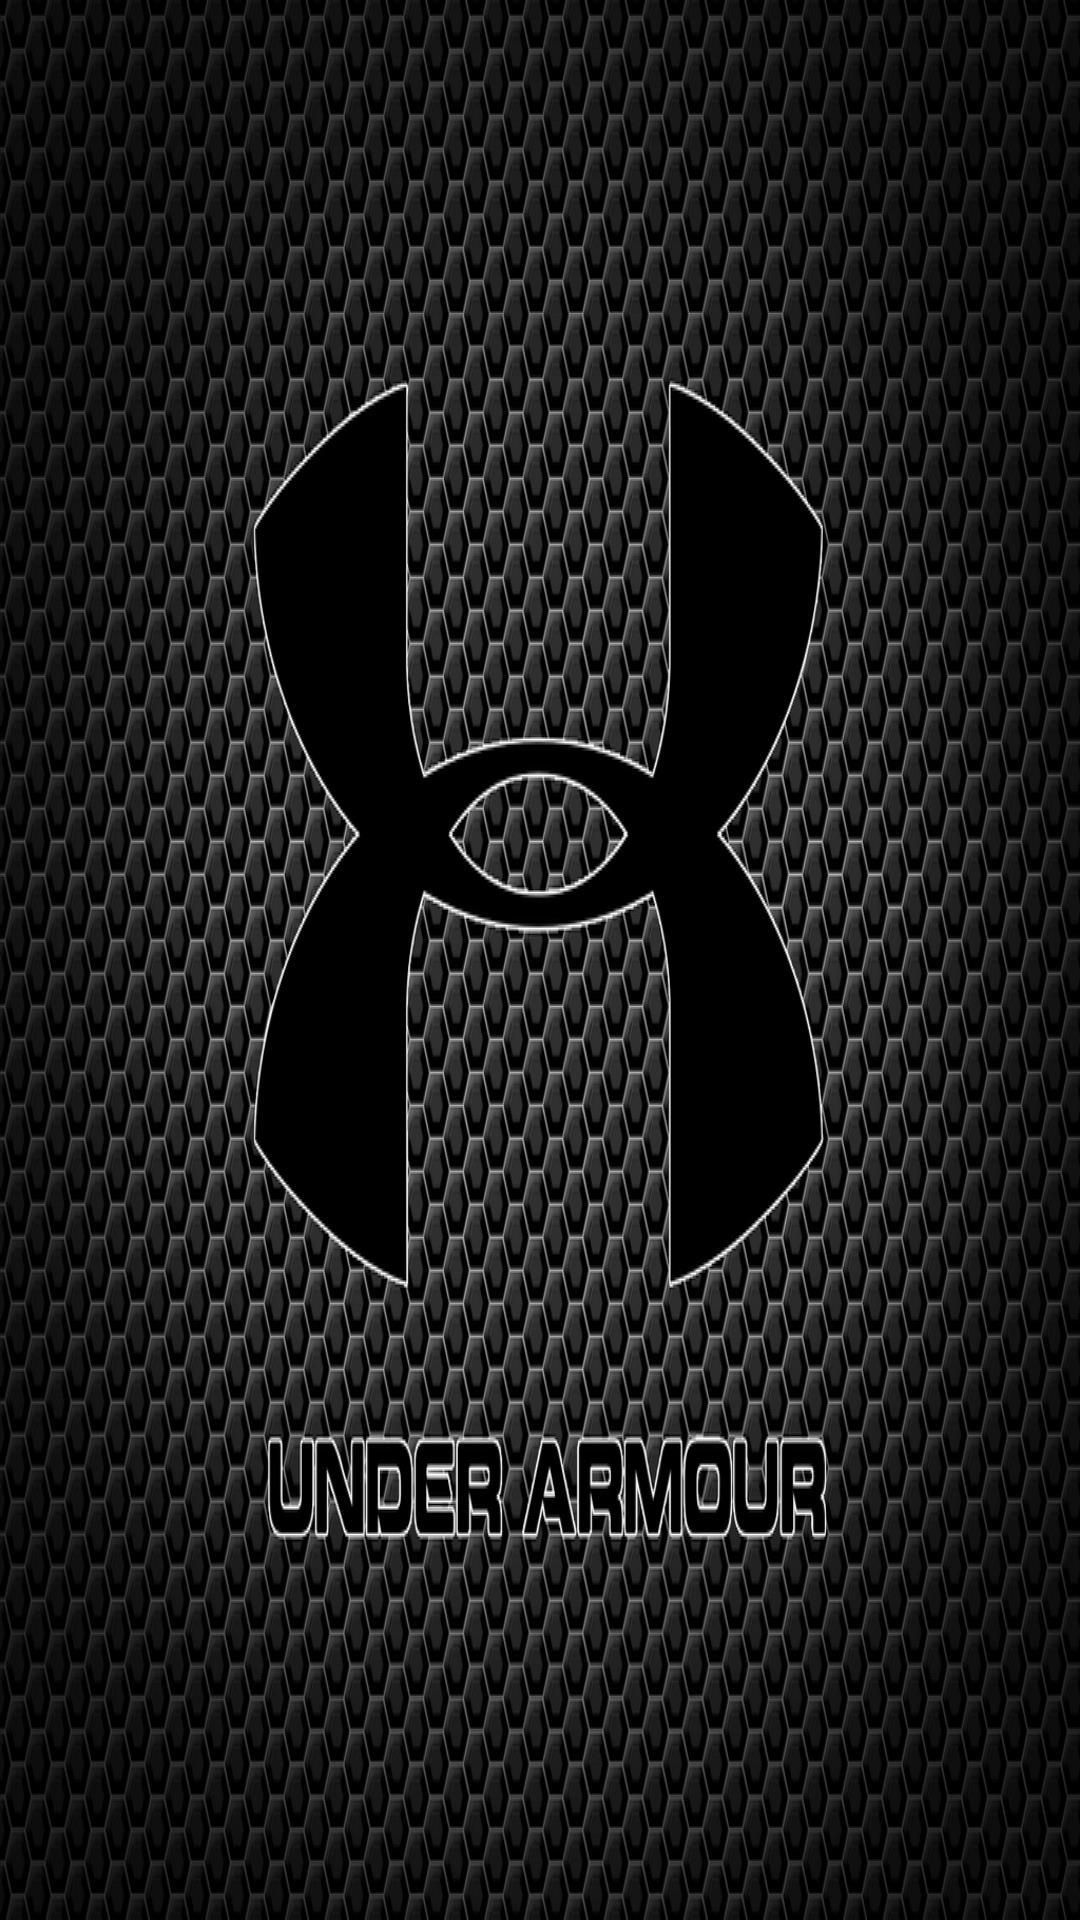 Under Armour logo wallpaper HD Under Armour logo